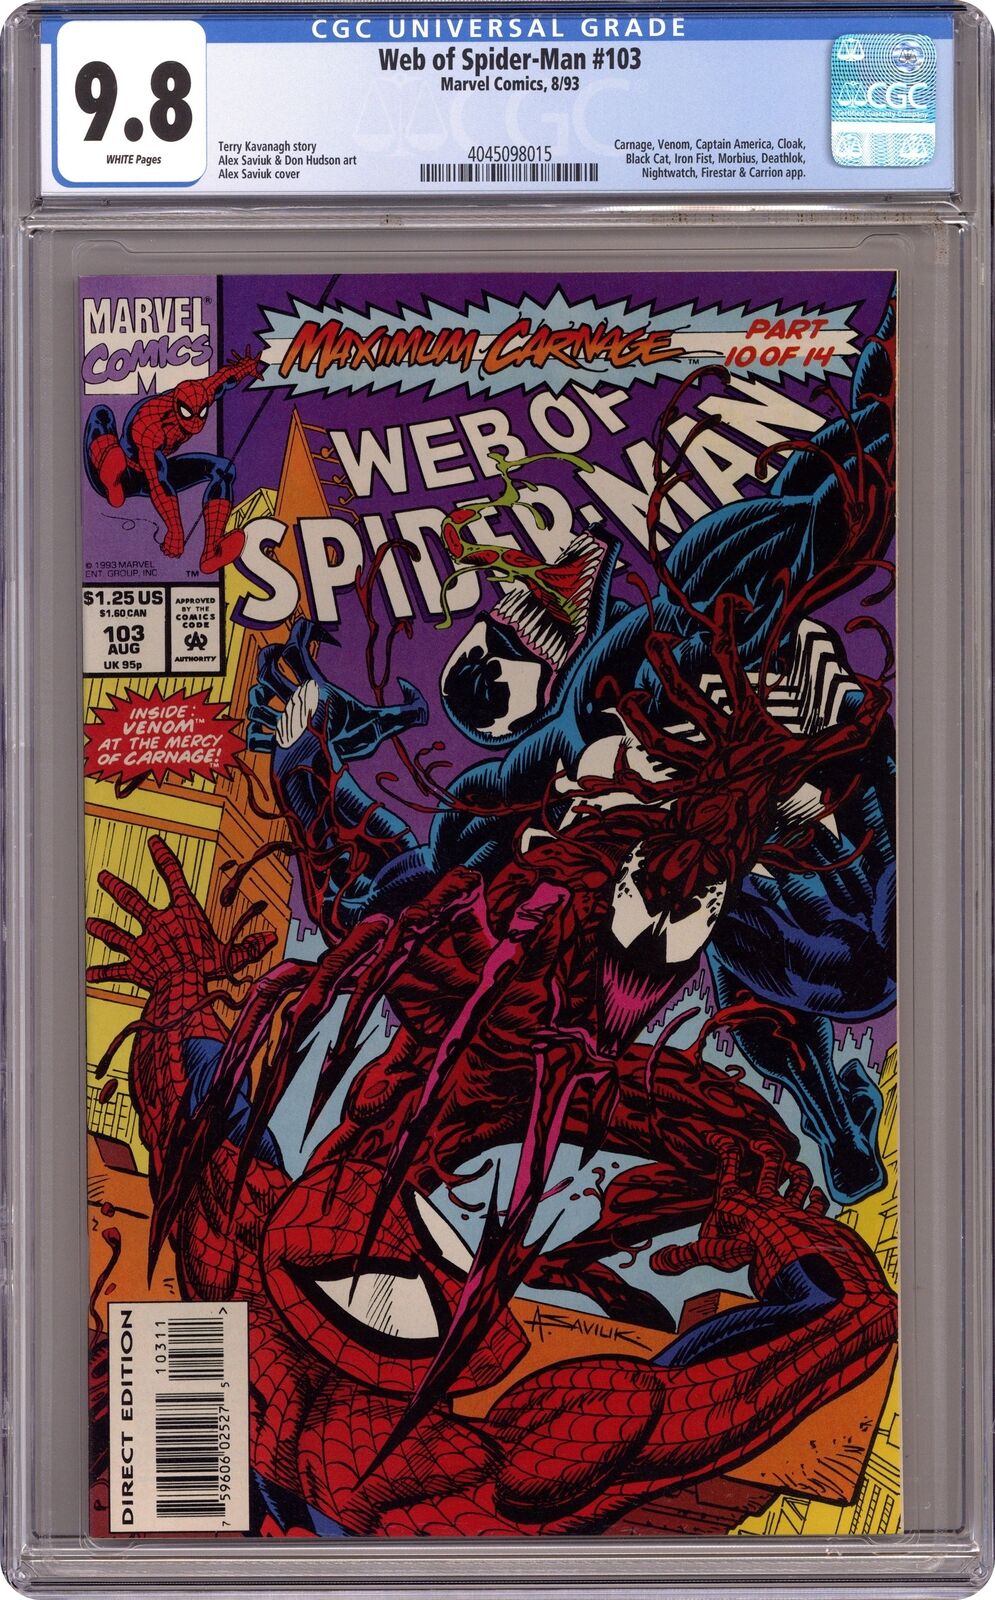 Web of Spider-Man #103 CGC 9.8 1993 4045098015